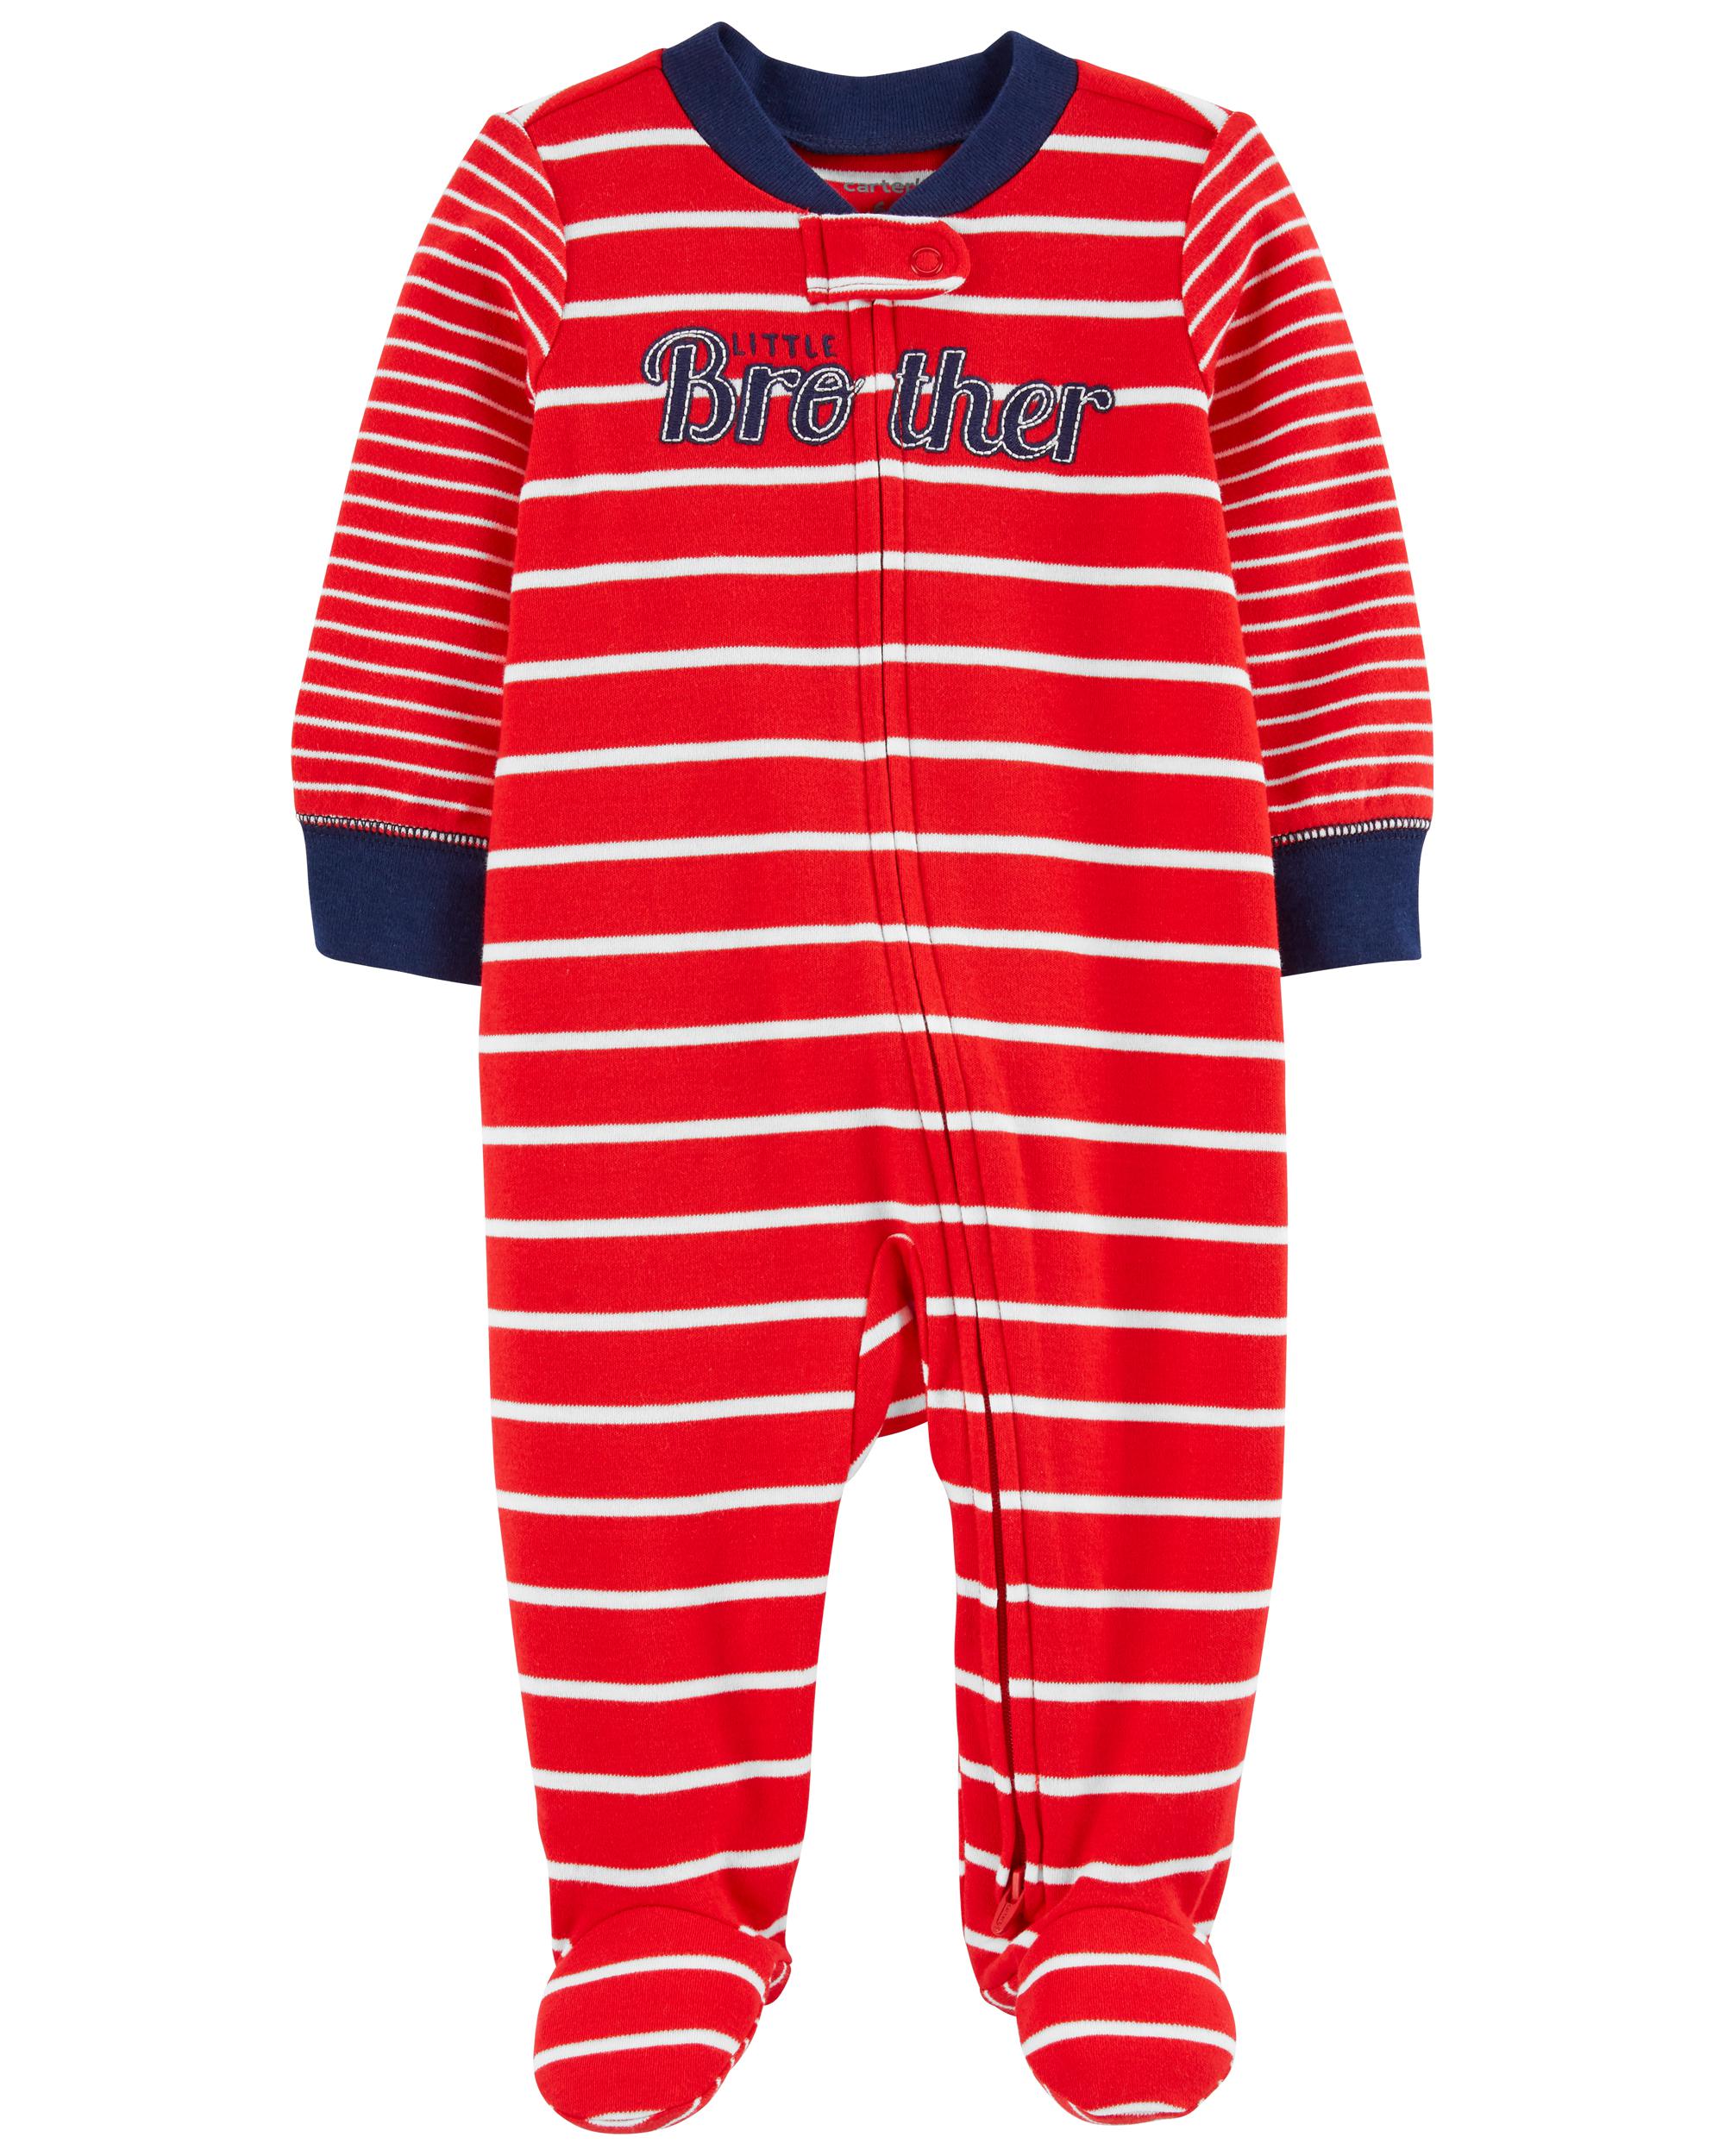 Brother 2-Way Zip Cotton Sleeper Pyjamas